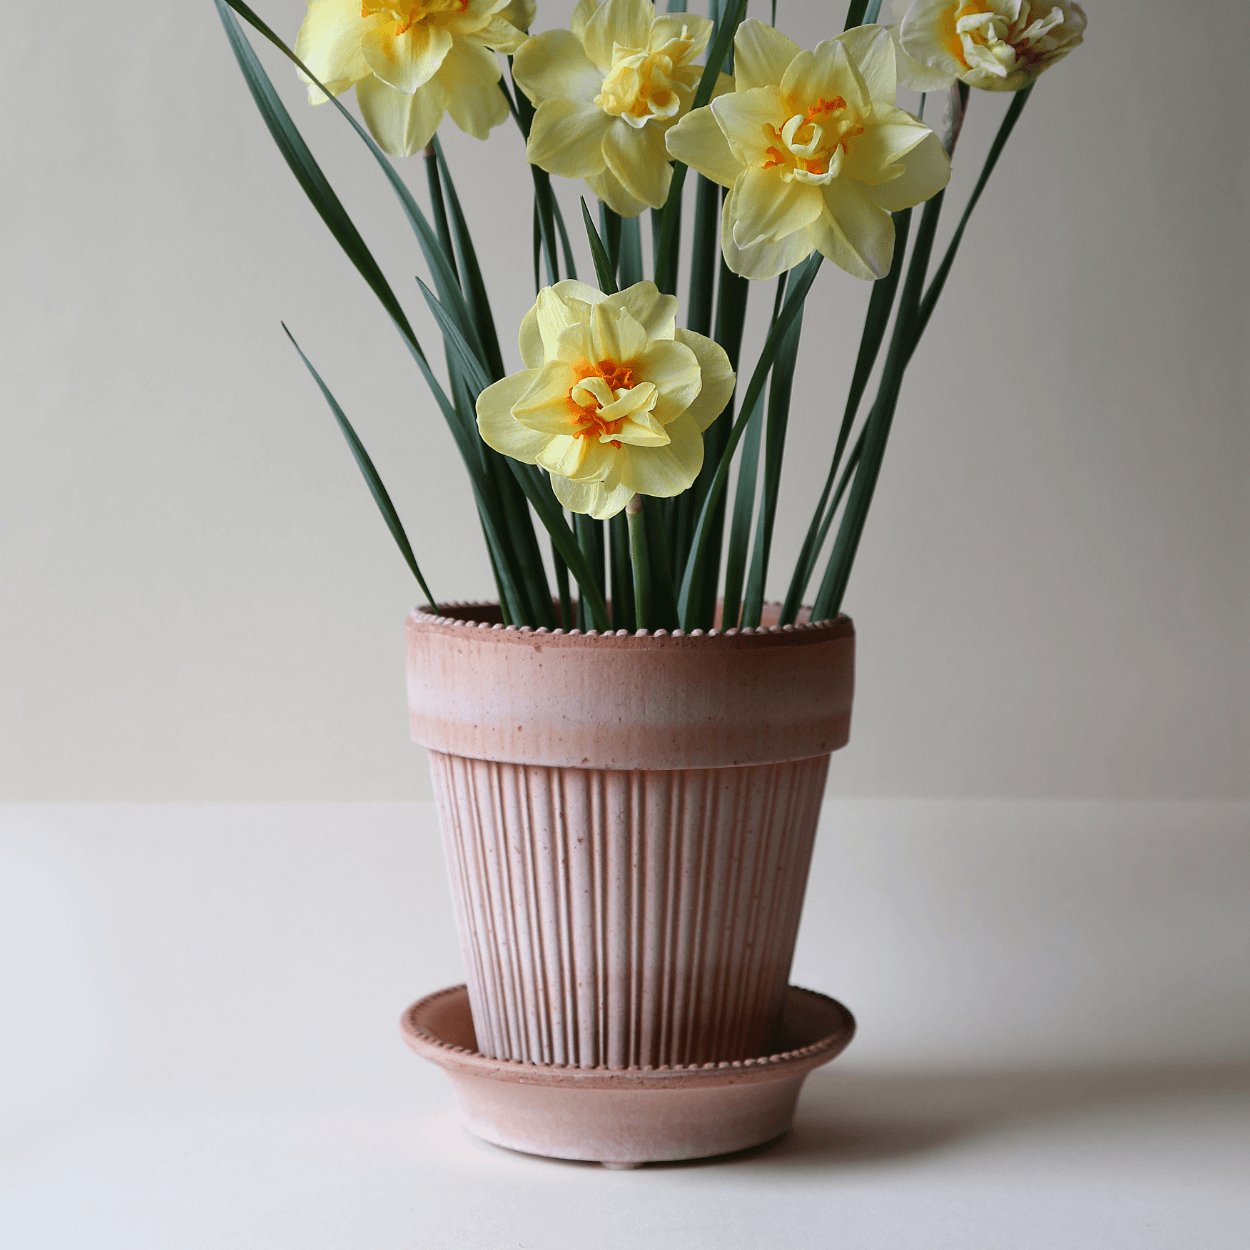 rose simona plant pot with yellow flowers